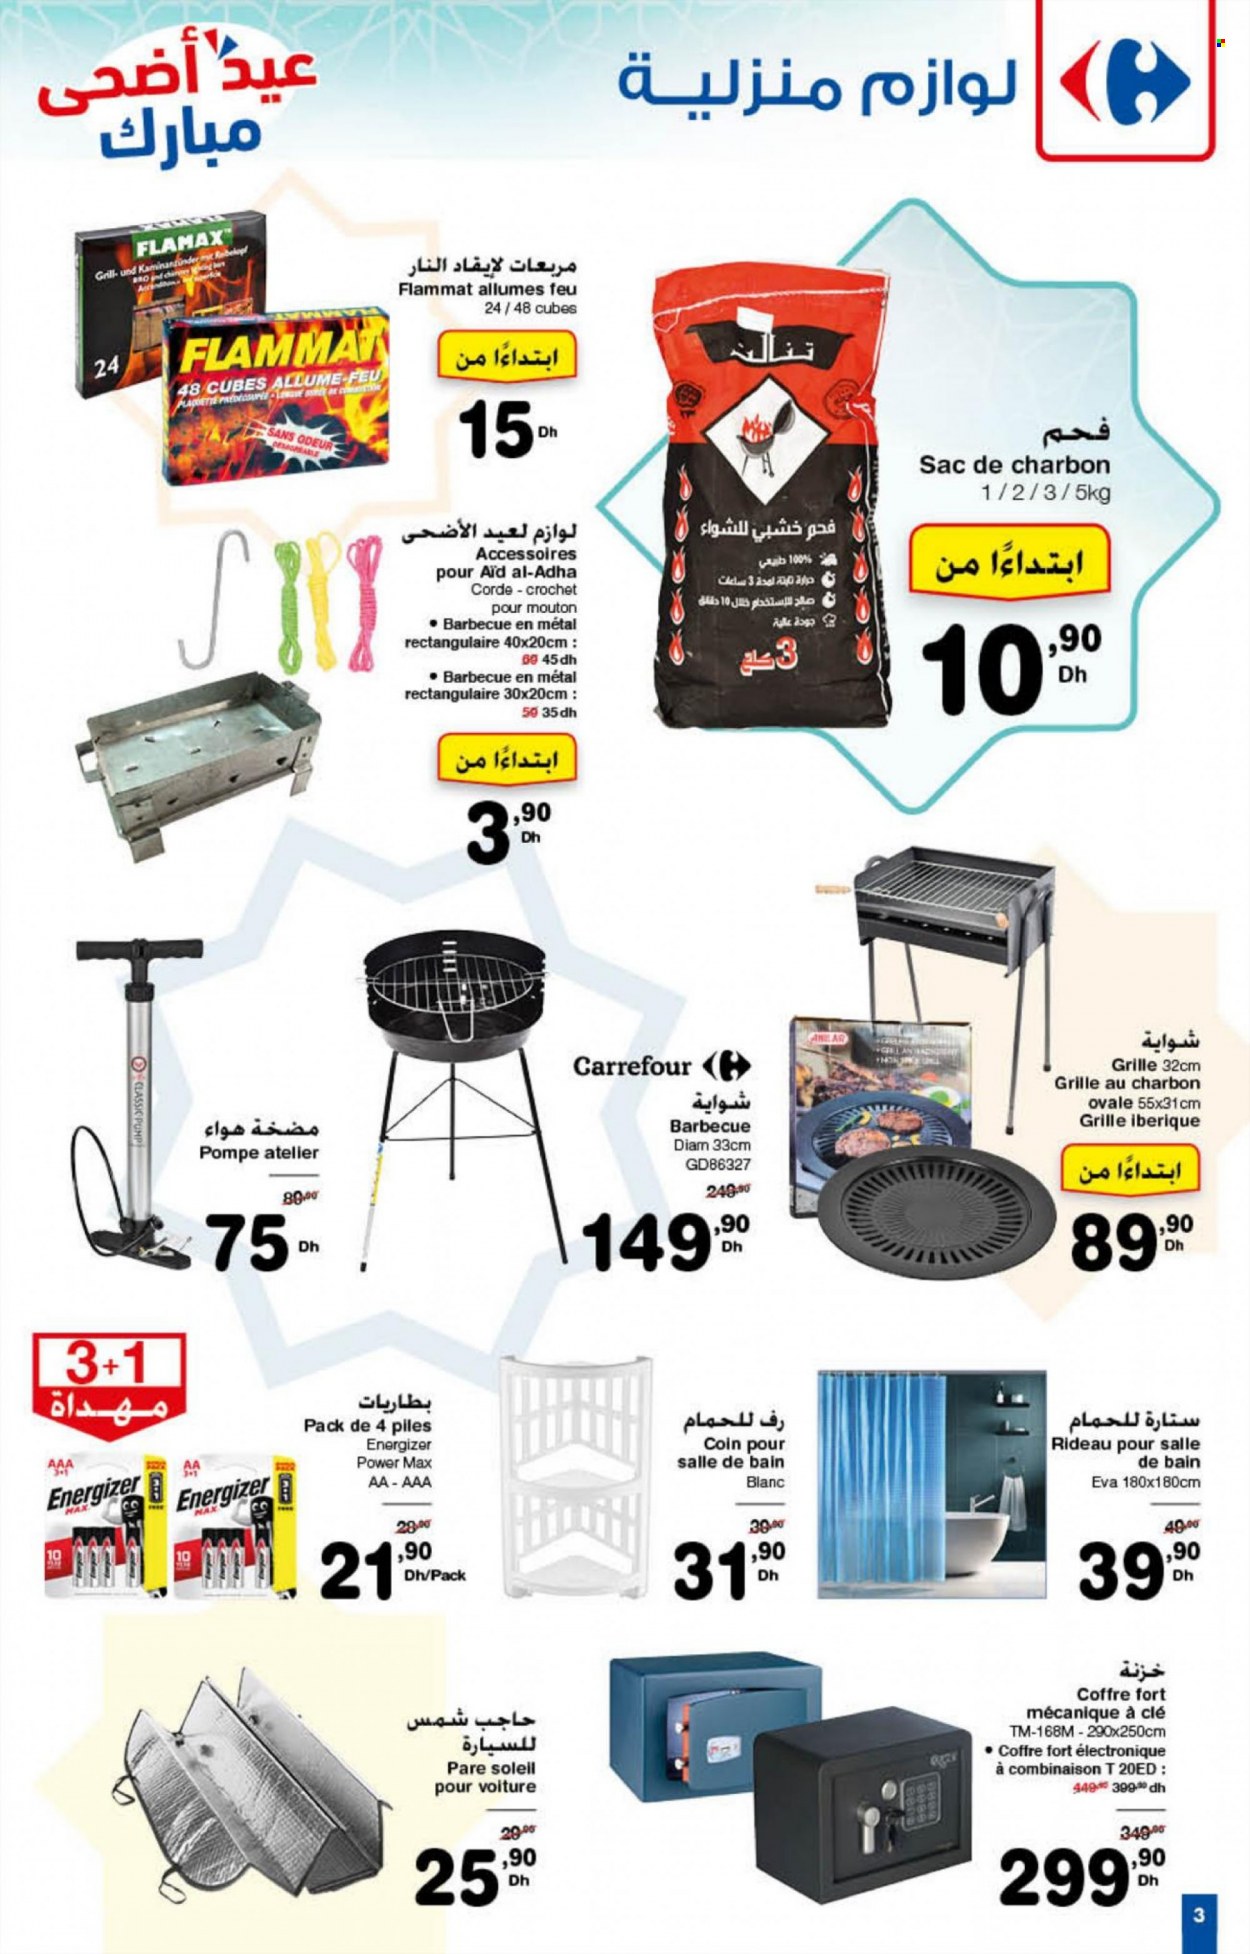 <magasin> - <du DD/MM/YYYY au DD/MM/YYYY> - Produits soldés - ,<products from flyers>. Page 3. 